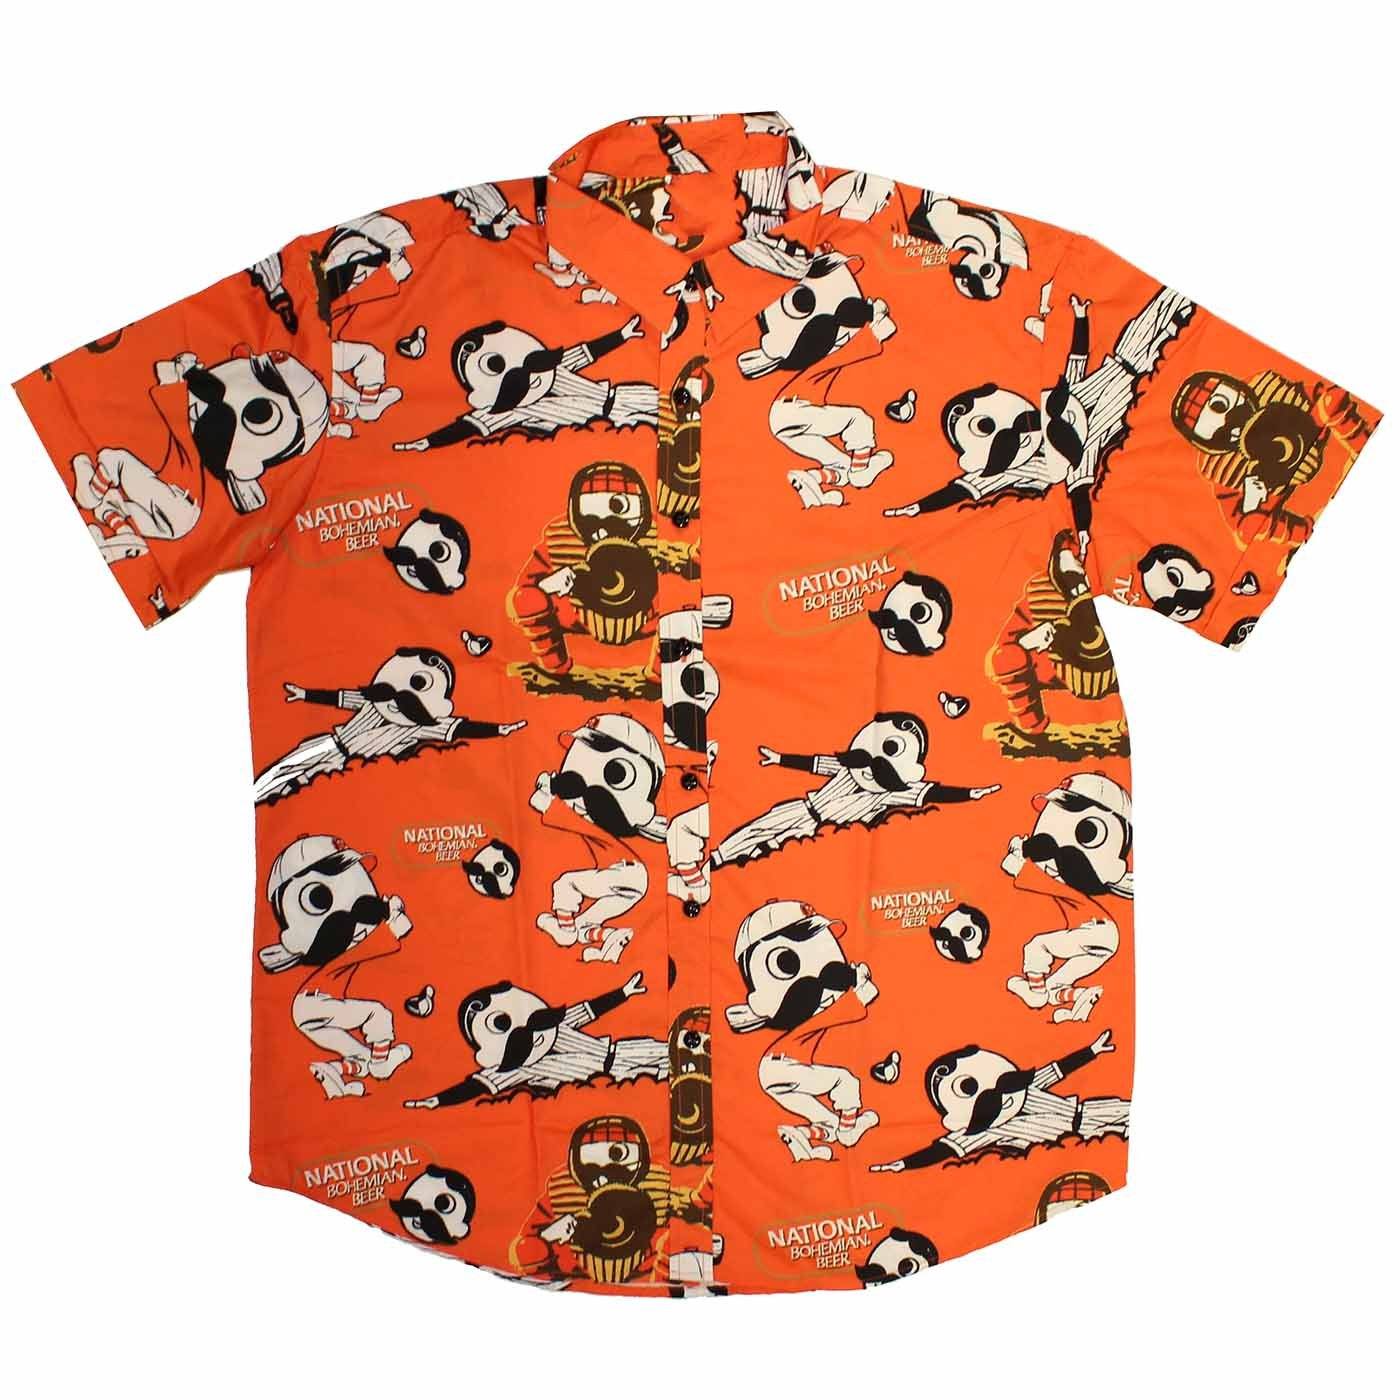 Natty Boh Baseball Players (Orange) / Hawaiian Shirt - Small Orange